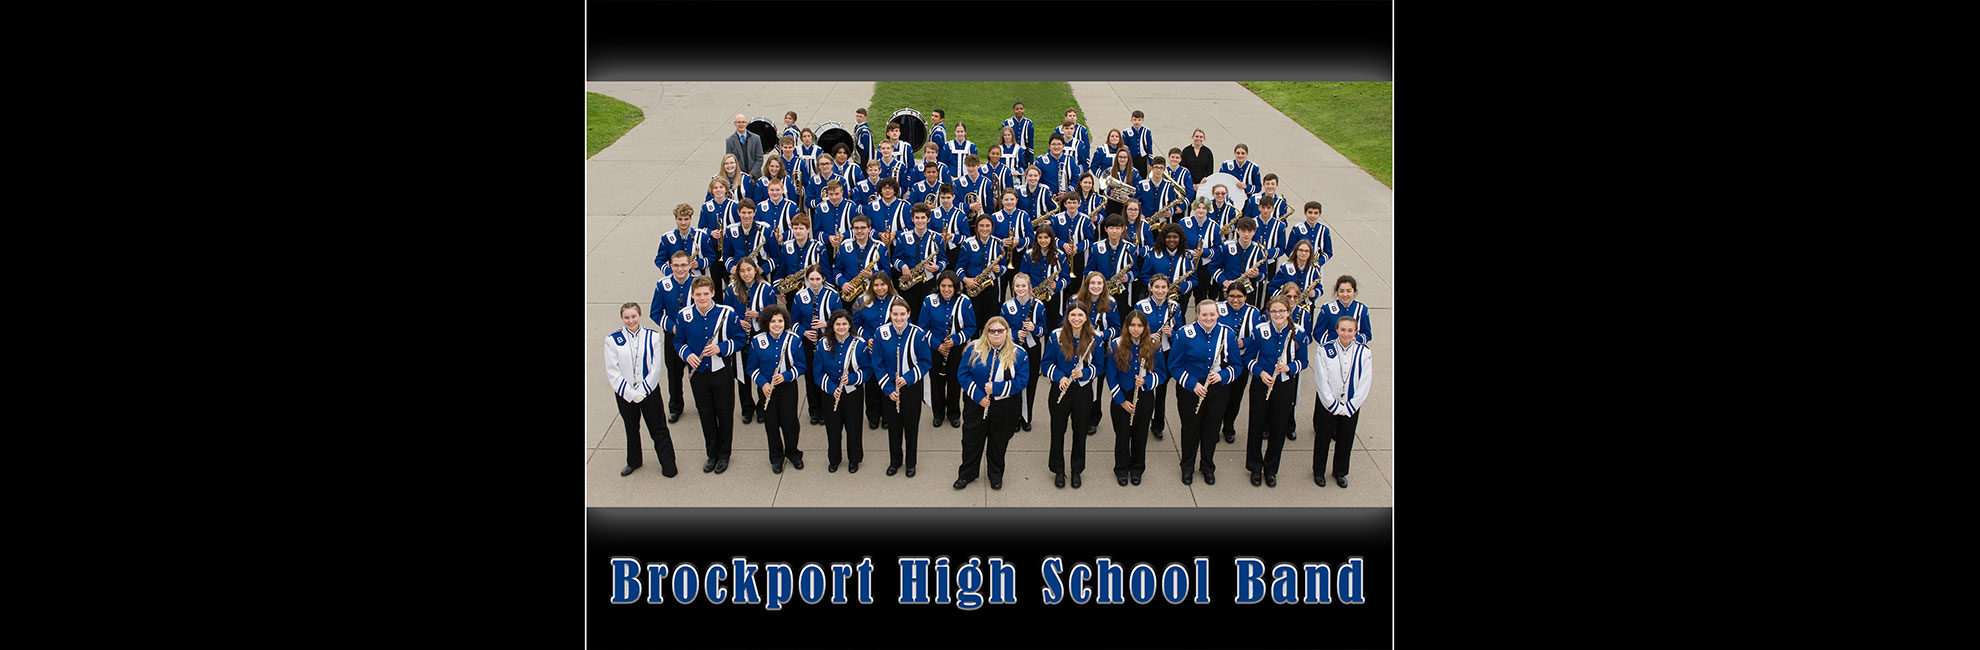 Brockport Band